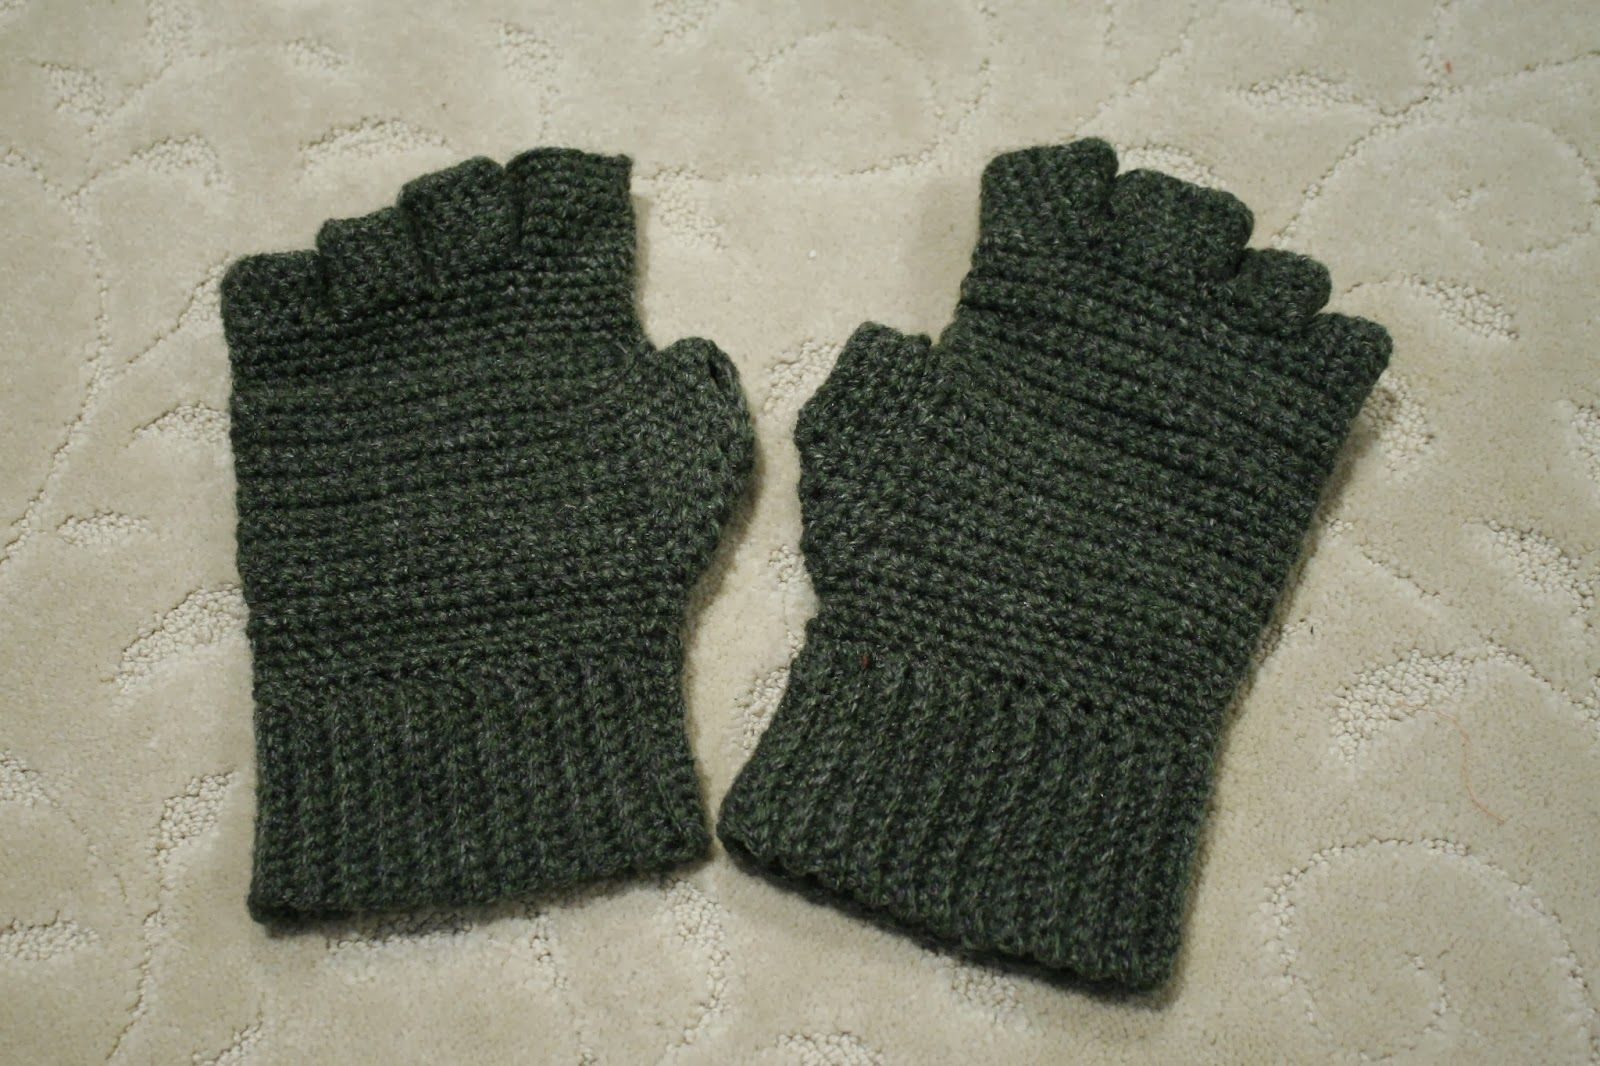 Crochet Gloves Pattern With Fingers Crochet Mens Fingerless Gloves The Pattern Also Has Instructions